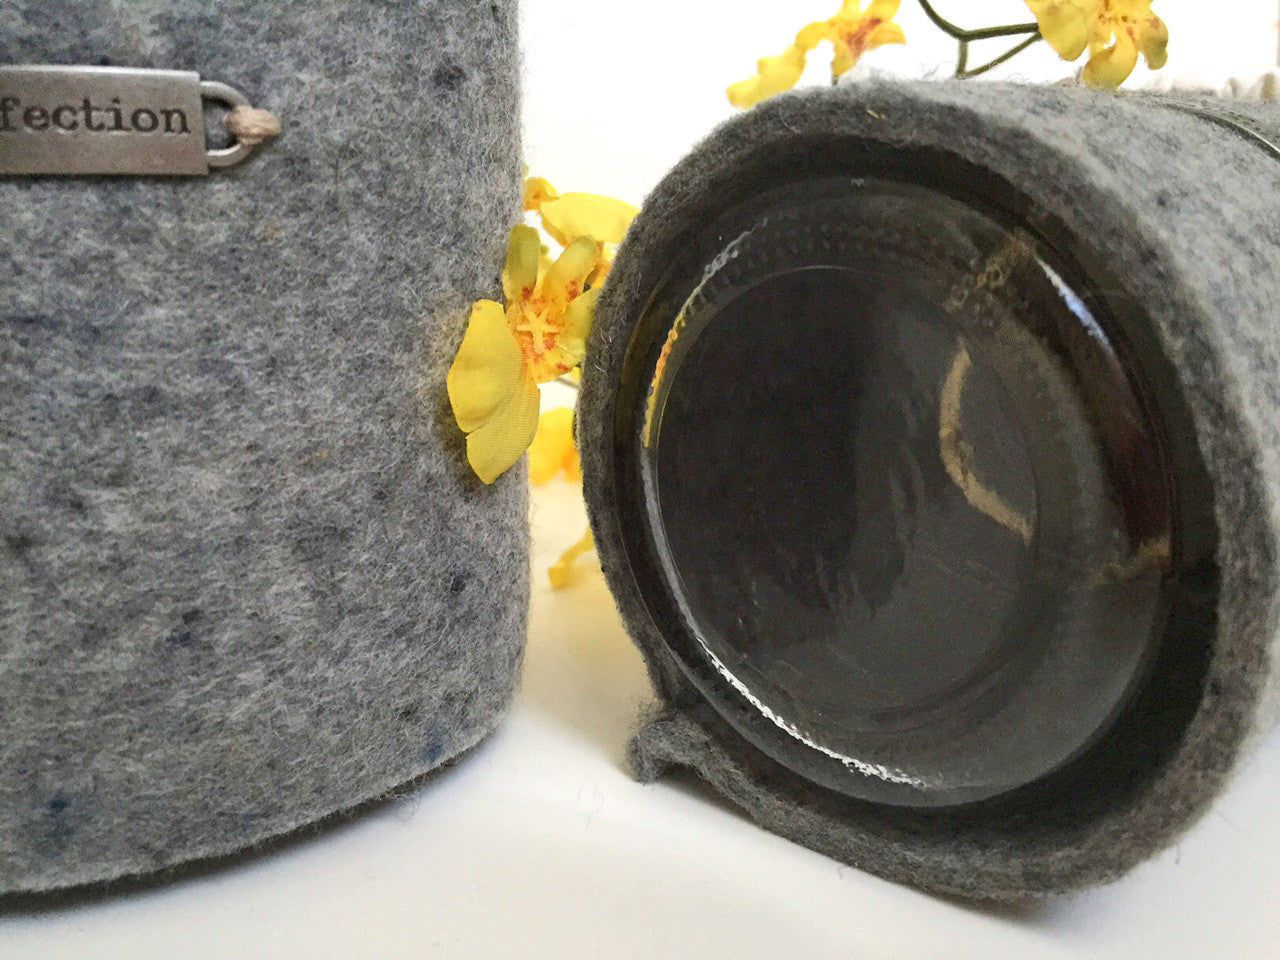 Wool Jar Insulator - Yemoos Nourishing Cultures